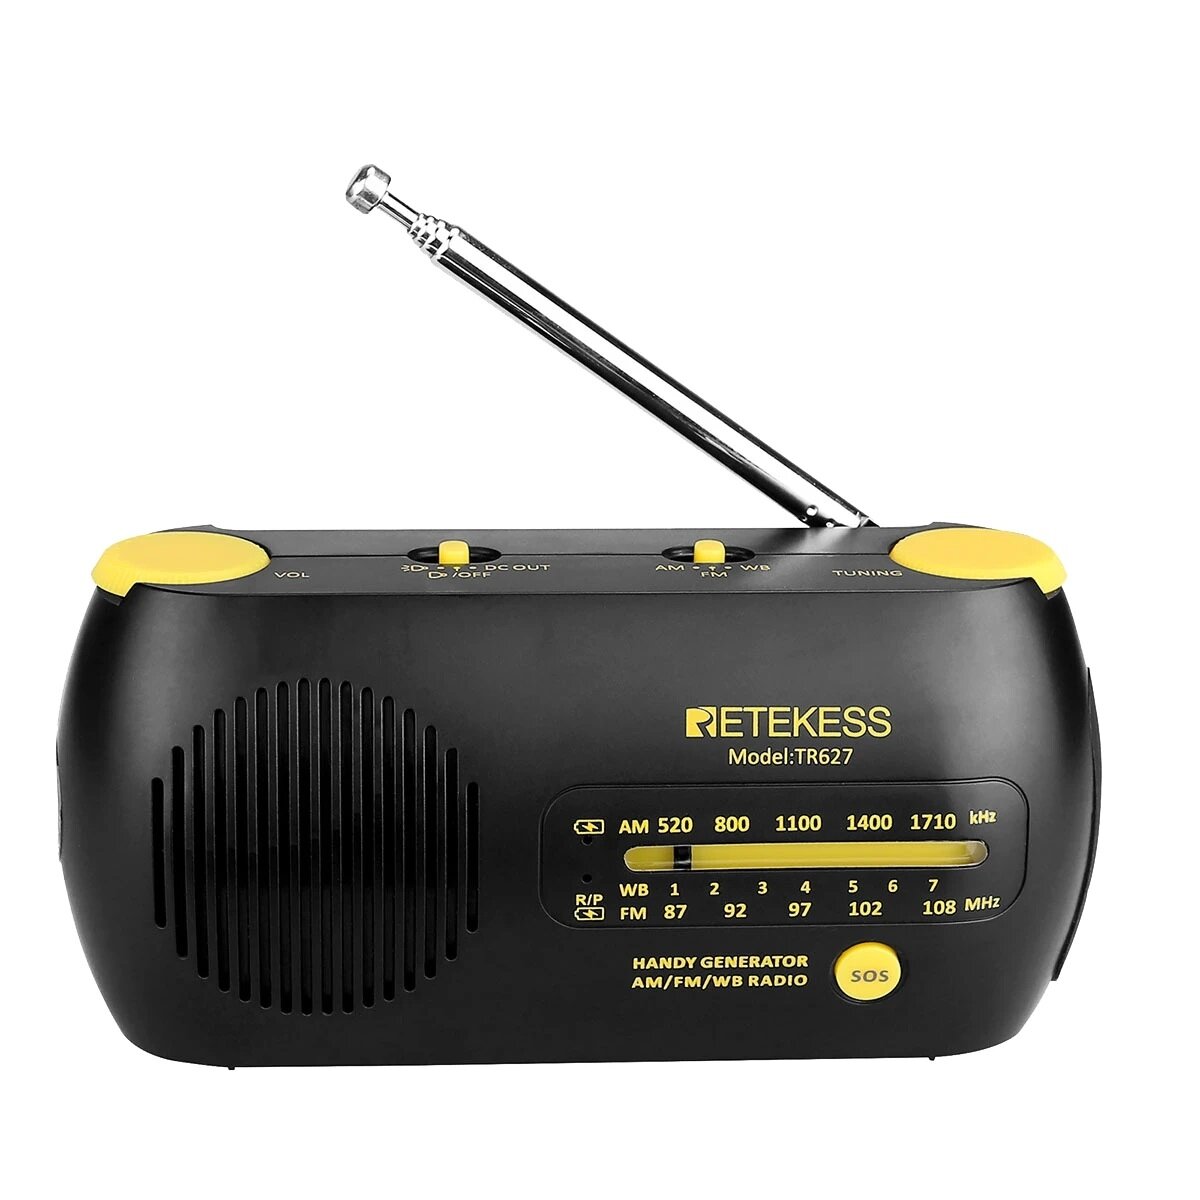 Retekes TR627 Radio Portable Radio FM AM NOAA Weather Radio Emergency SOS Hand Crank Solar Receiver With Flashlight MP3 Player Digital Recorder